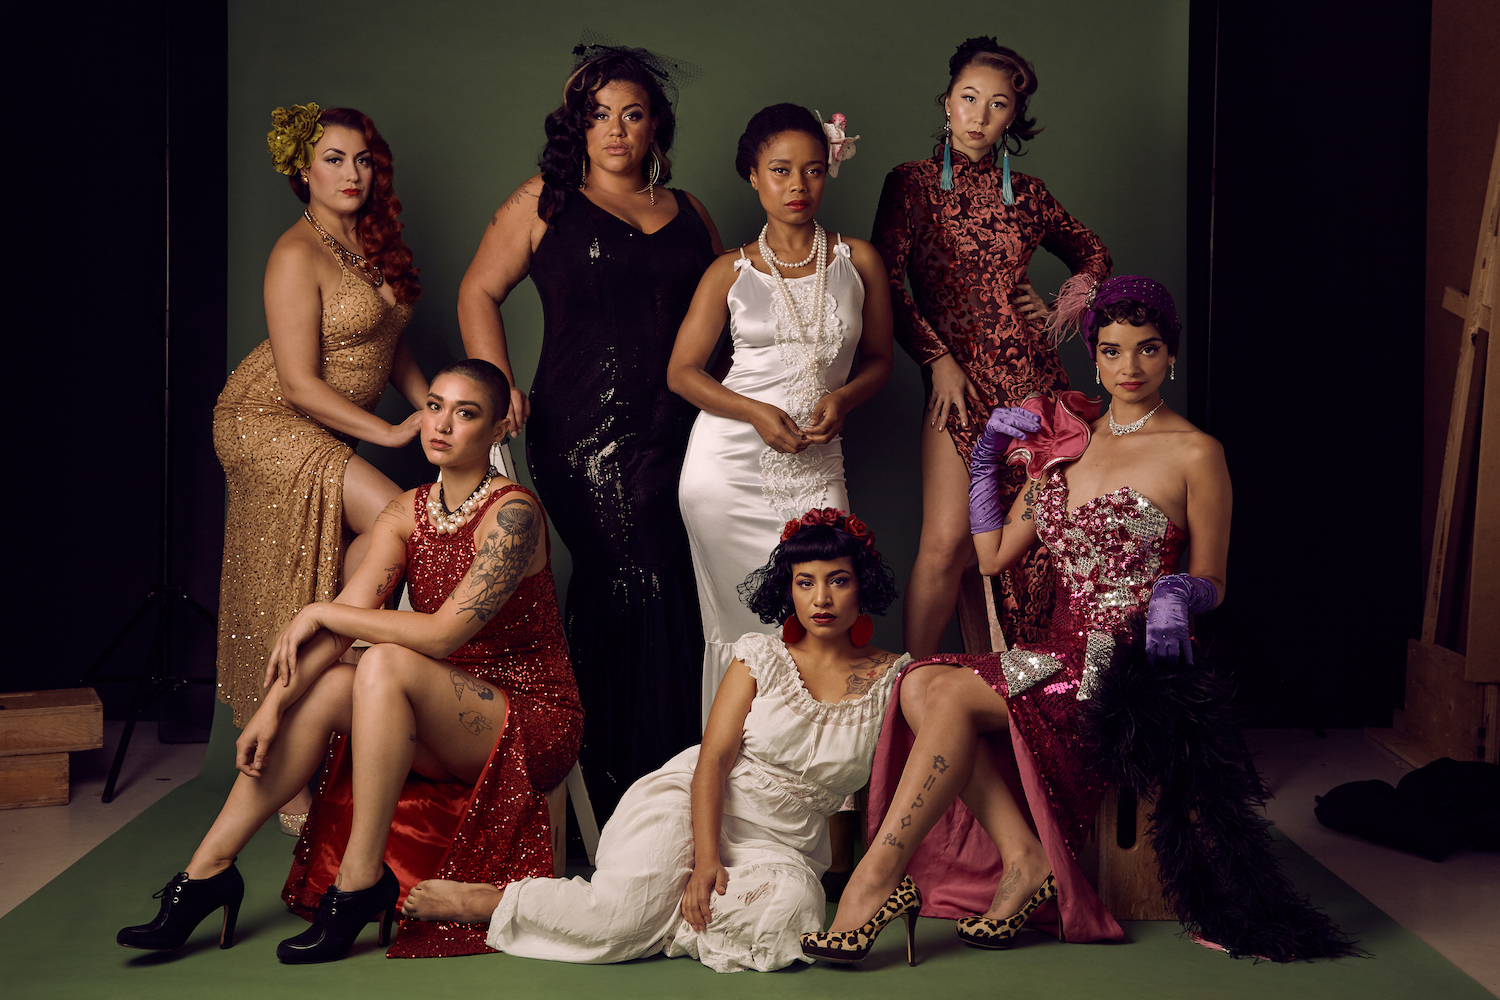 Les Femmes Fatales. Seven women and non-binary burlesque dancers